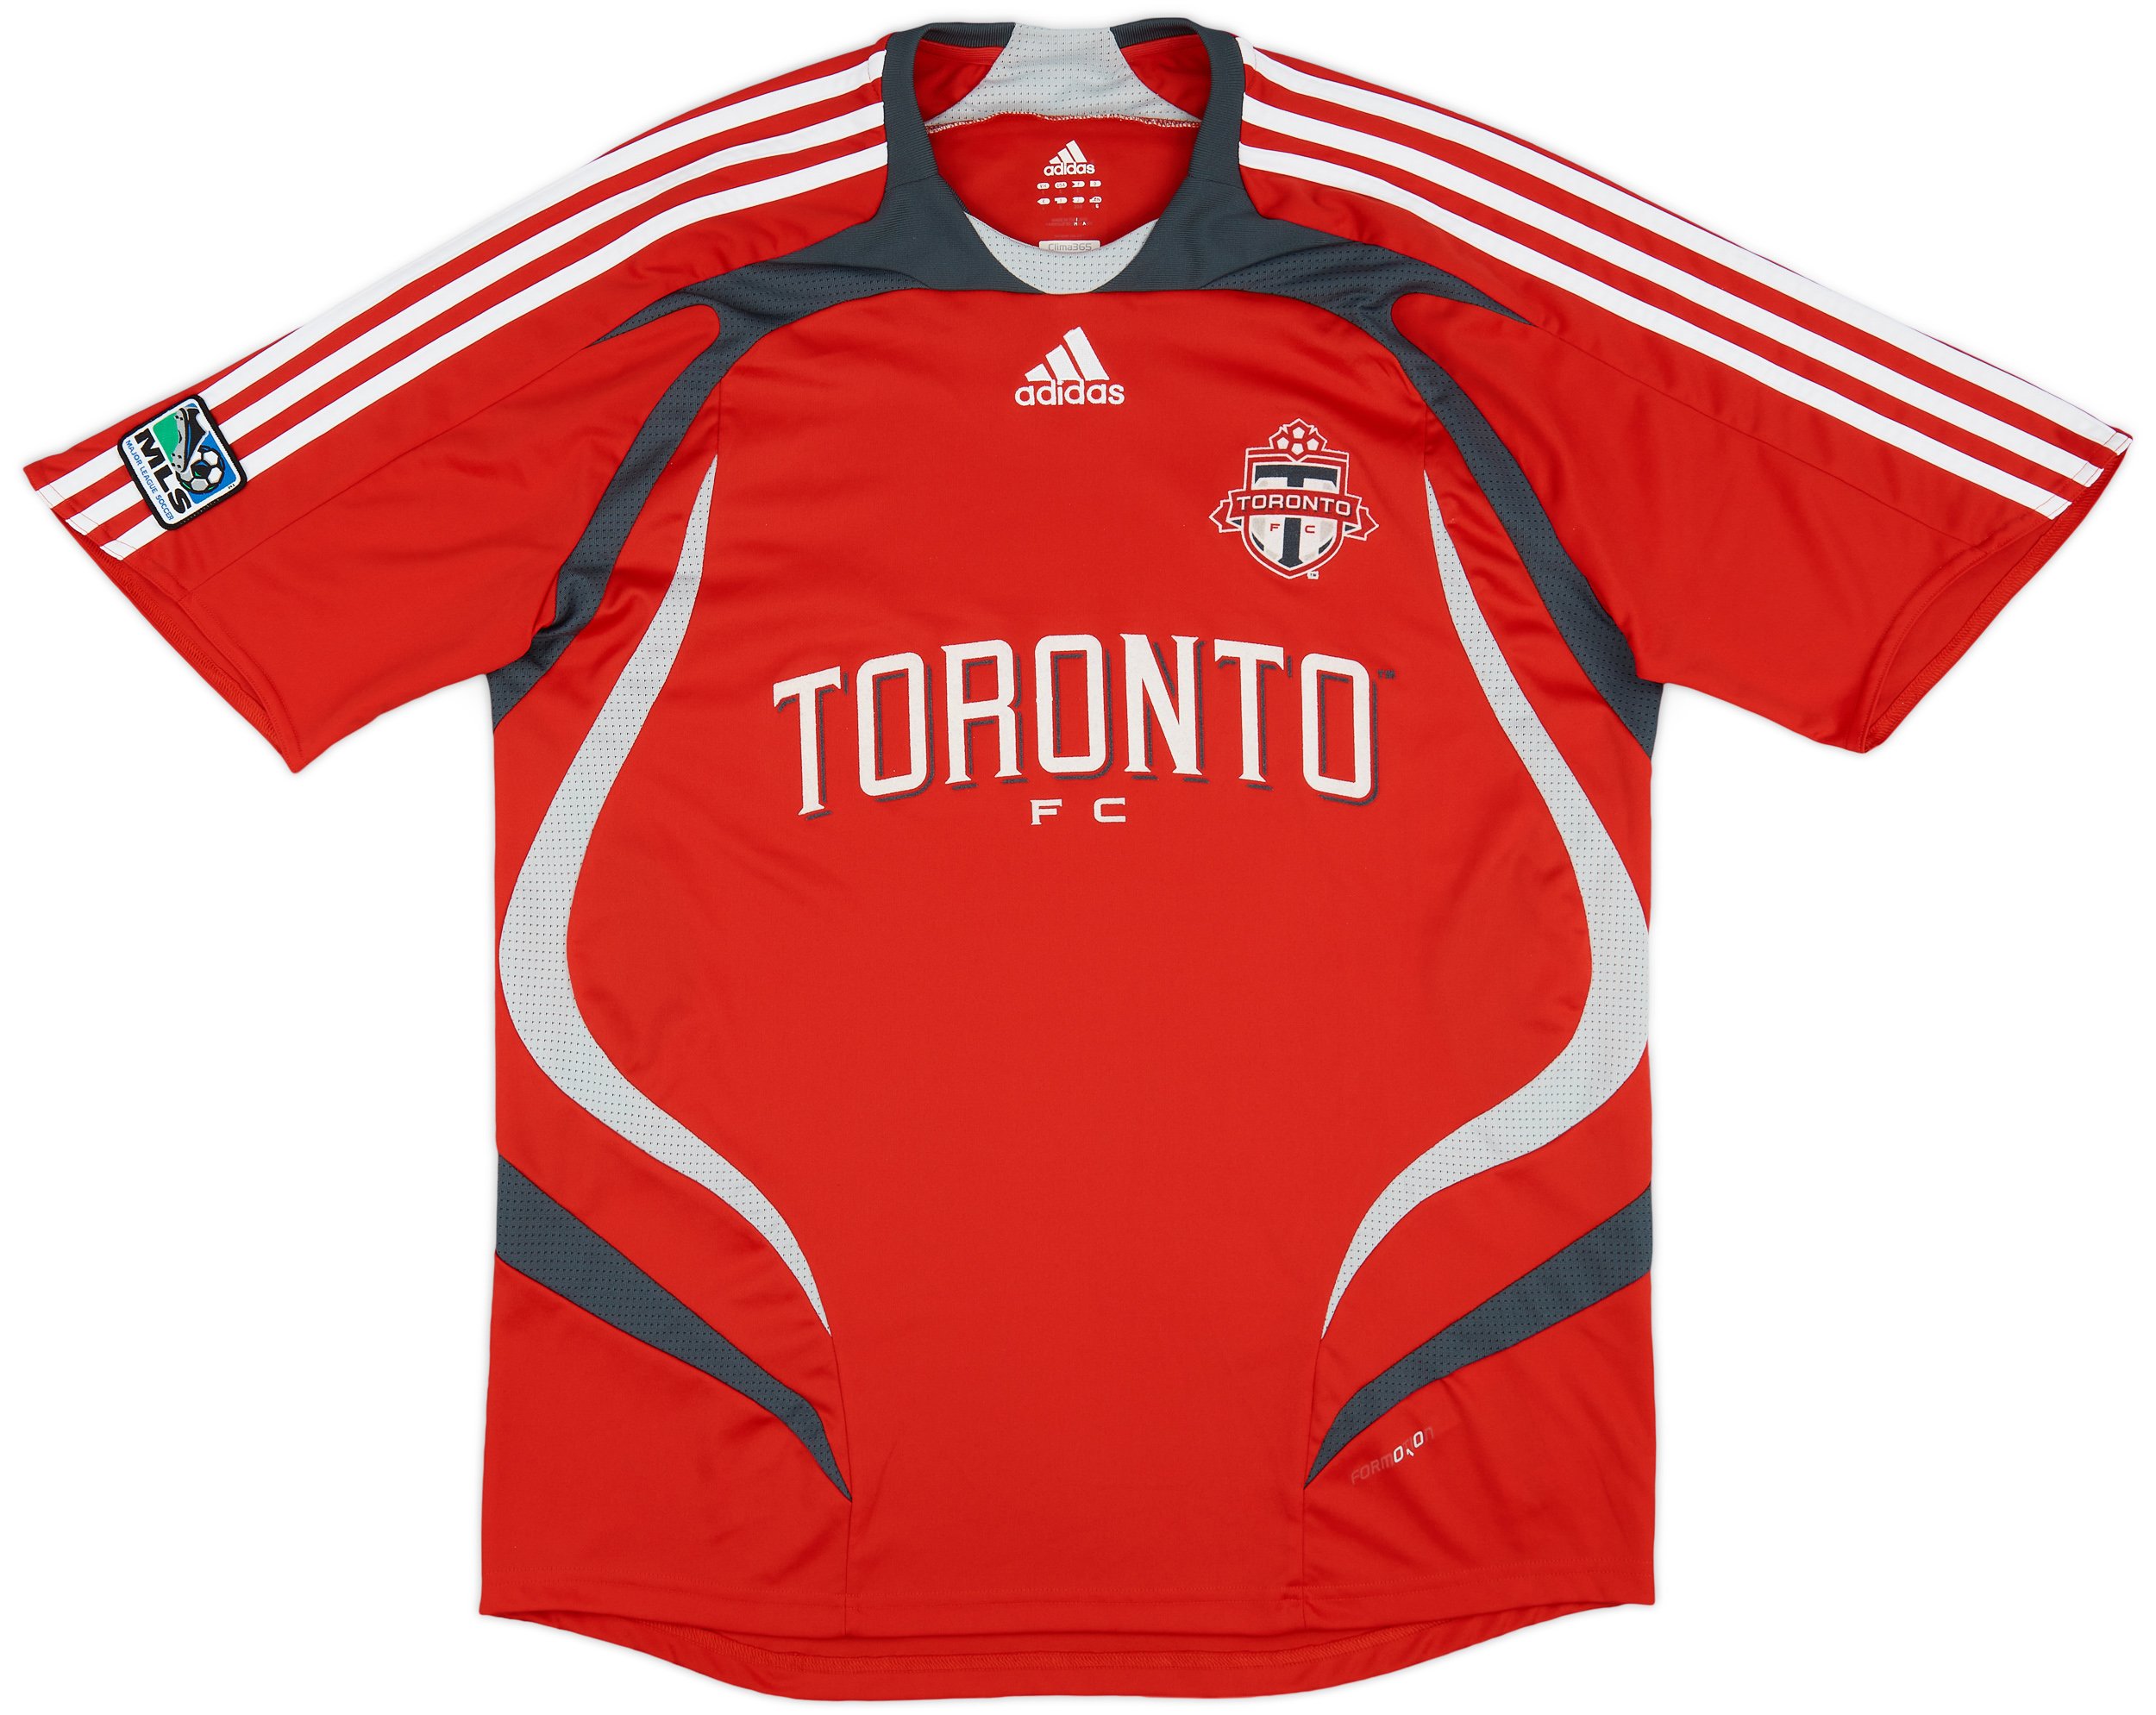 Cheap Toronto FC Football Shirts / Soccer Jerseys